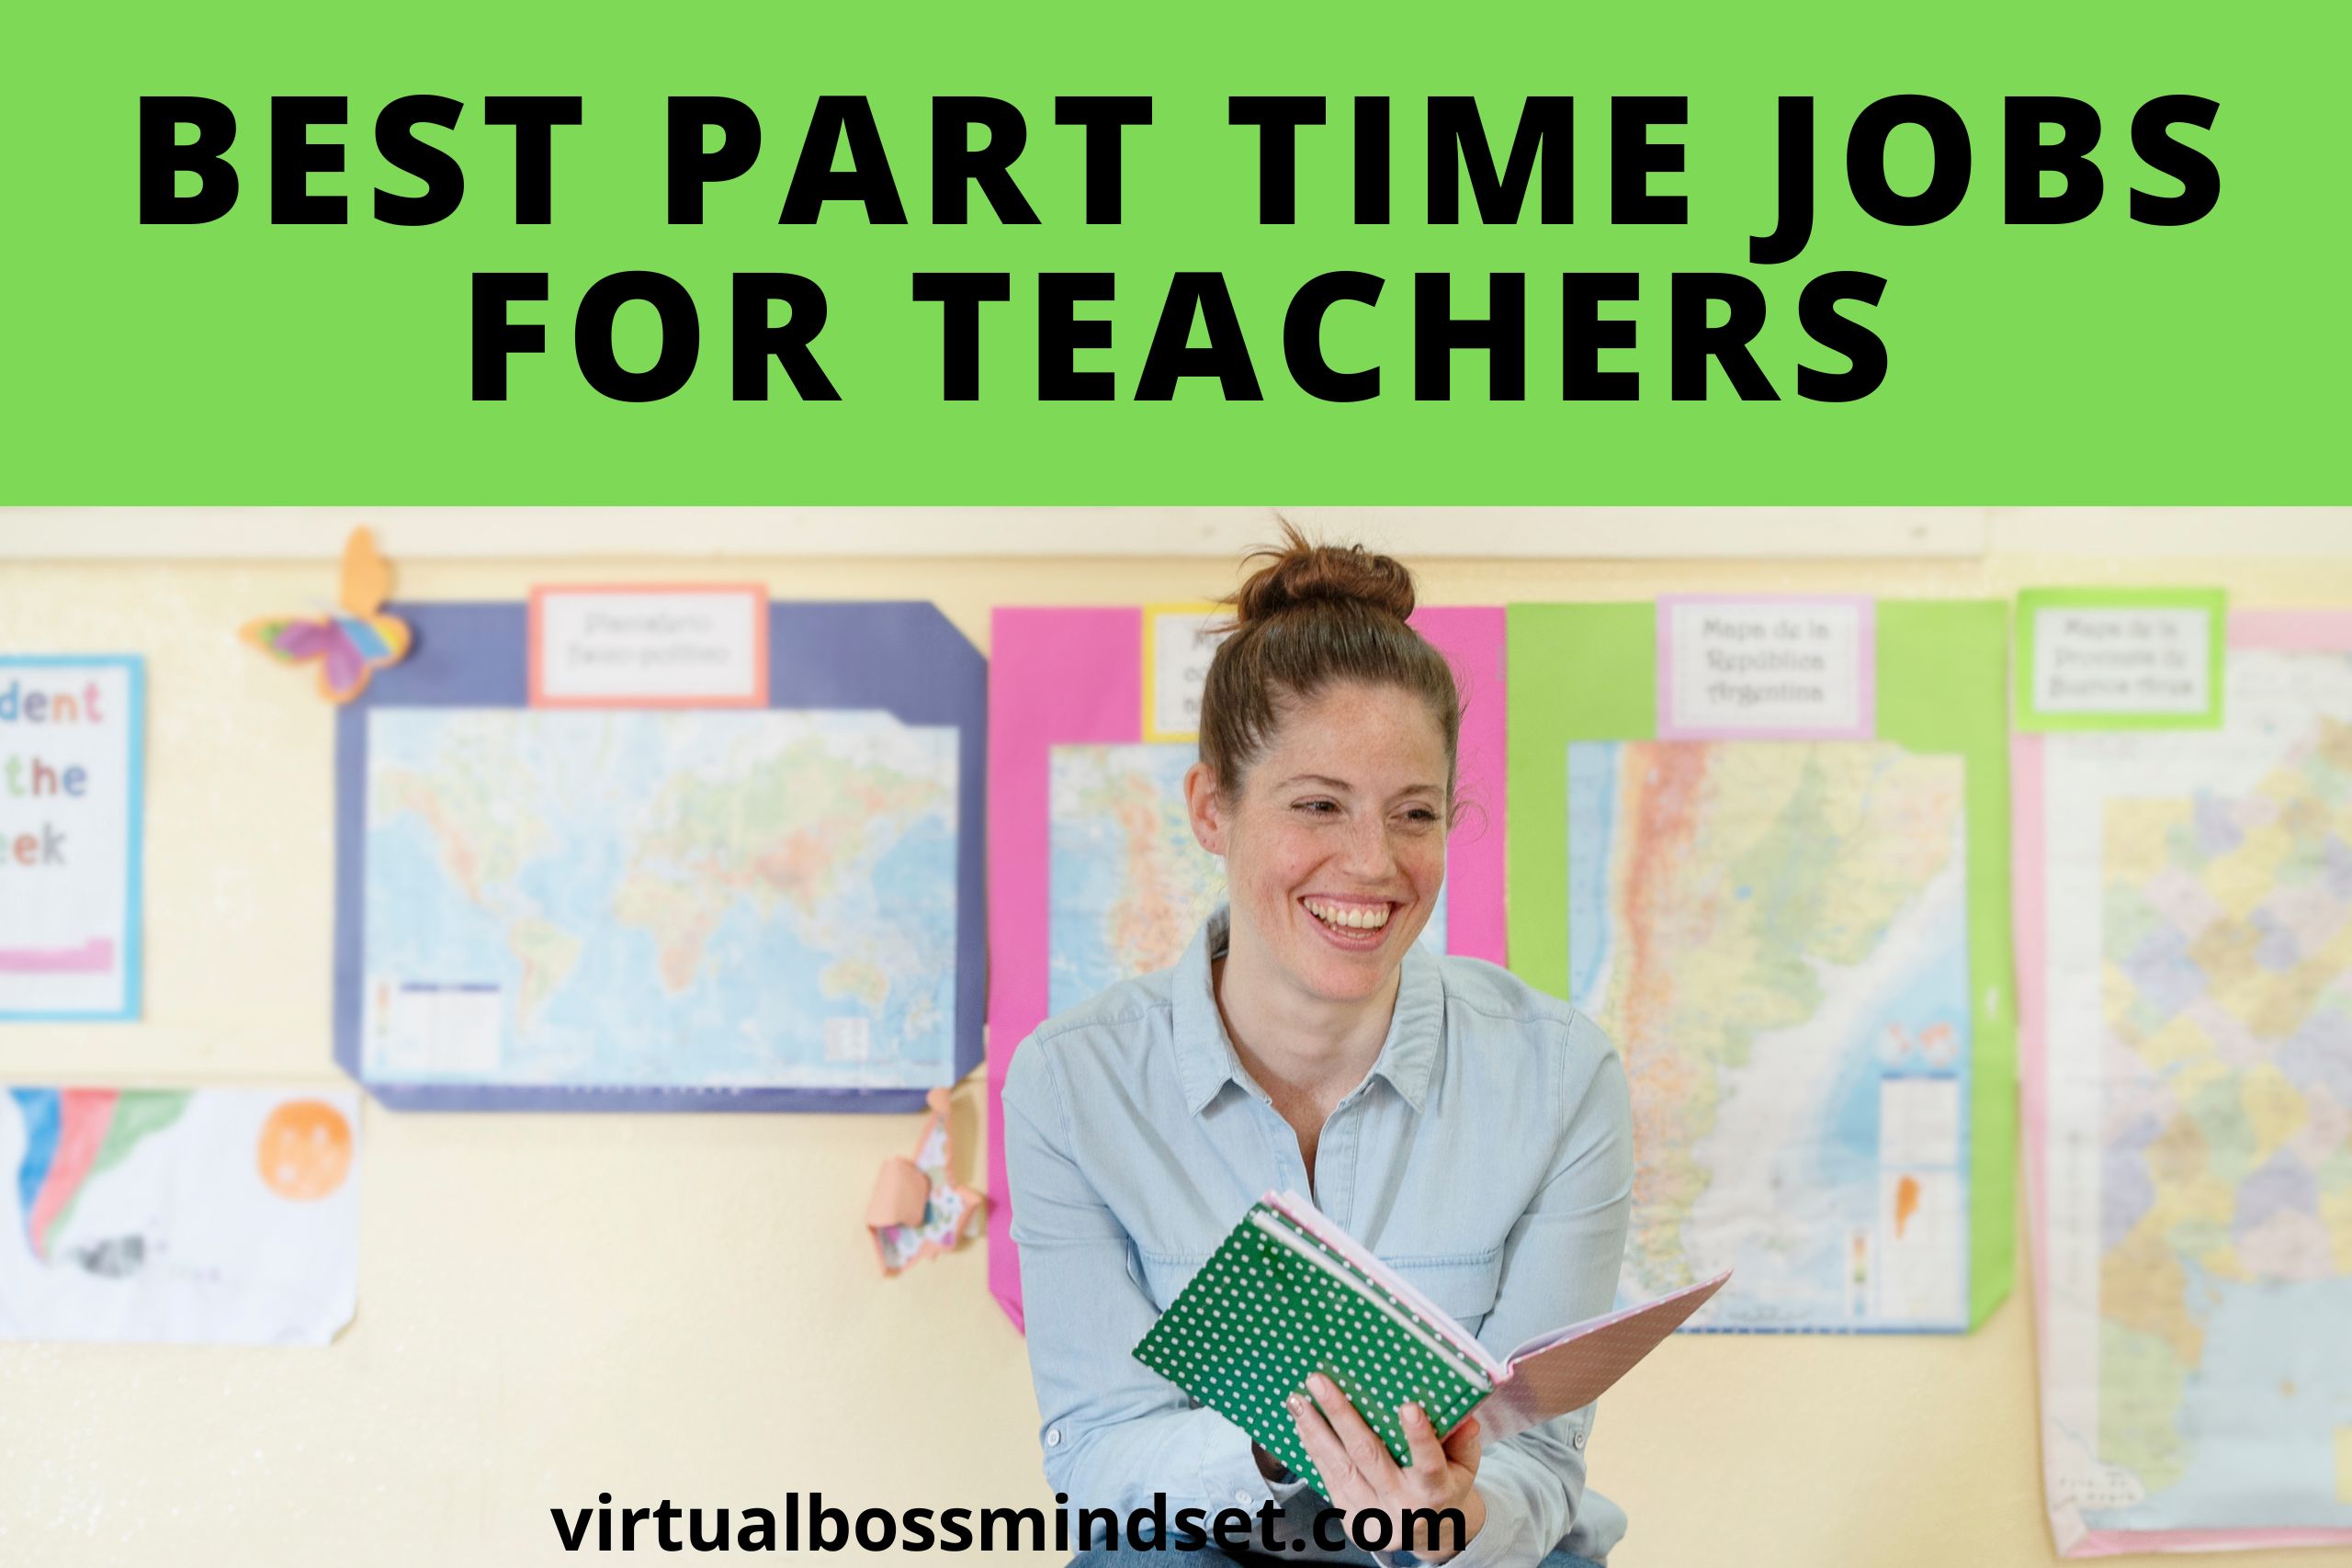 Best Part-Time Jobs for Teachers